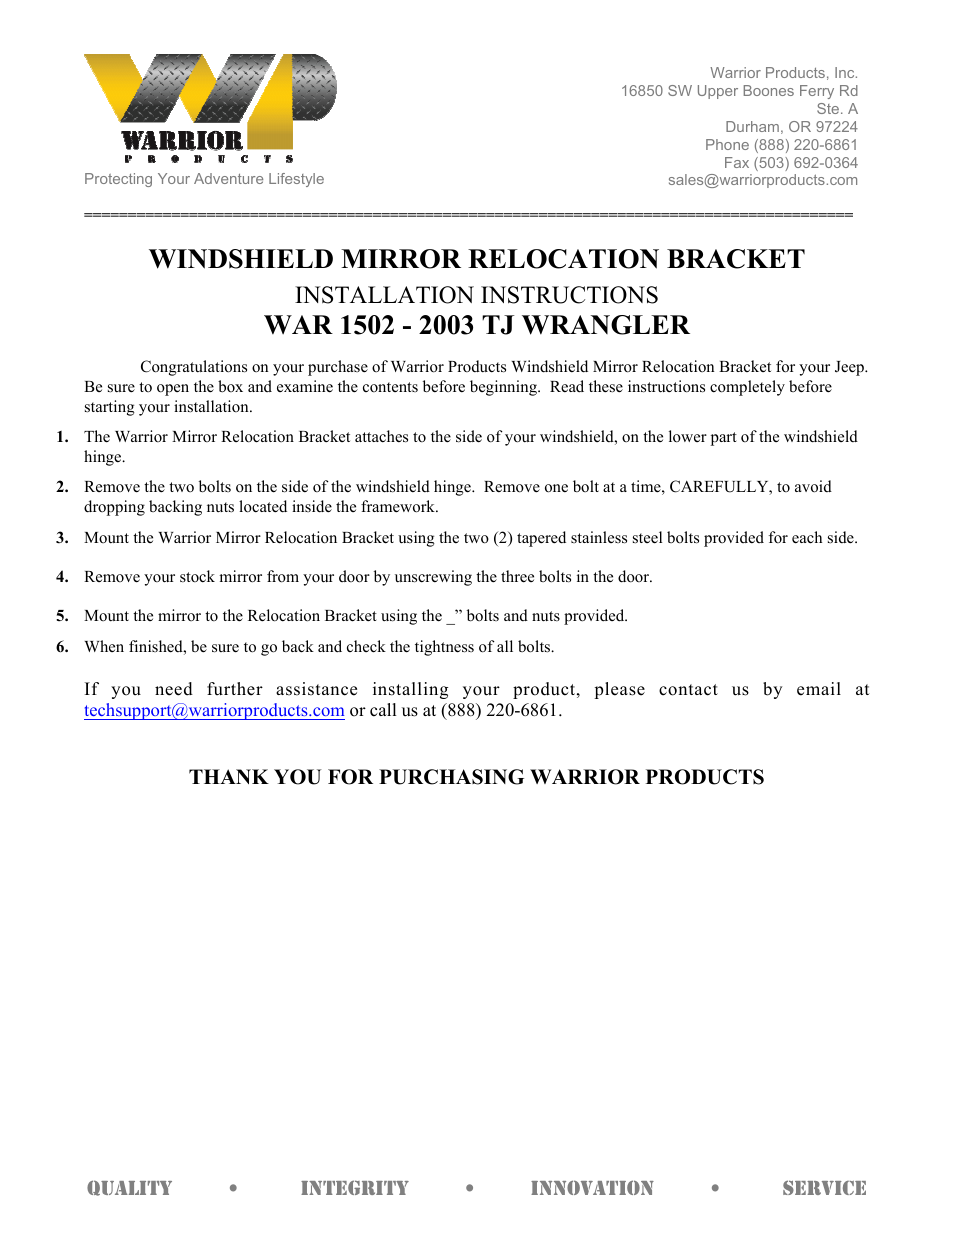 1502-2003 WINDSHIELD MIRROR RELOCATION BRACKET (1997 – 2006 Jeep TJ Wrangler)